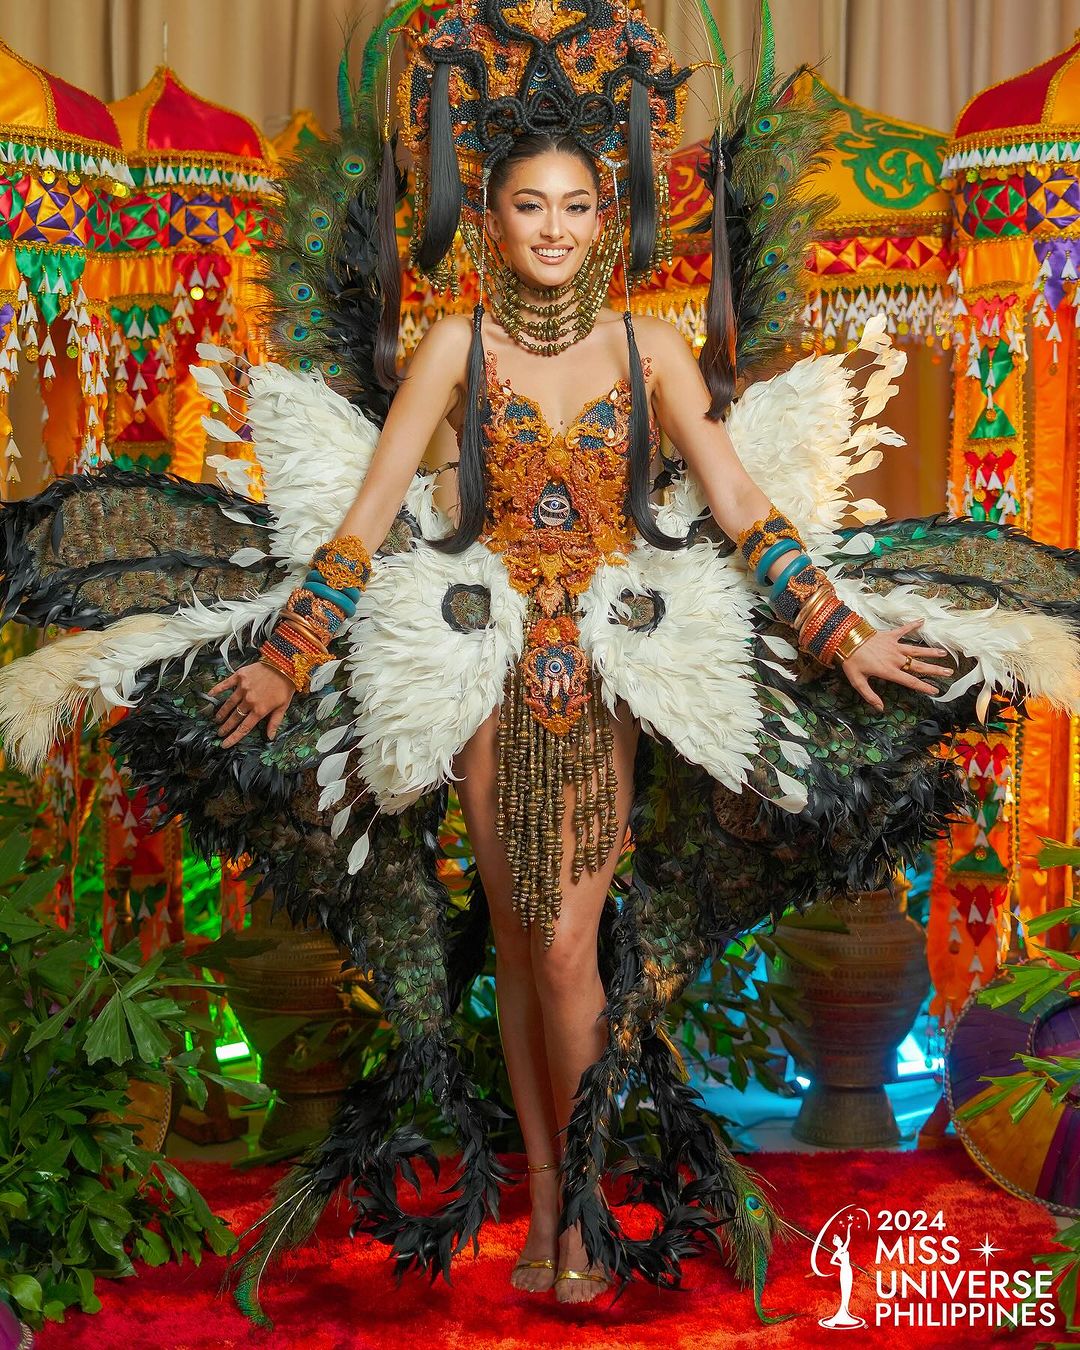 Miss Universe Philippines 2024 national costume Victoria Velasquez Vincent of Bacoor City